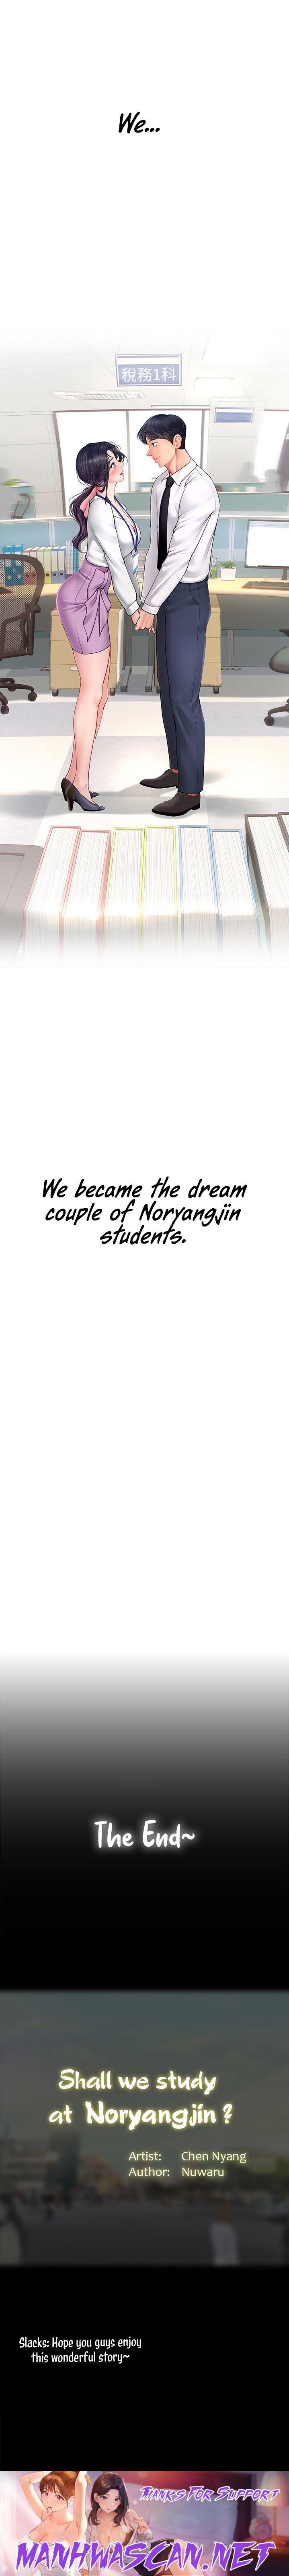 Should I Study at Noryangjin? - Chapter 101 Page 20